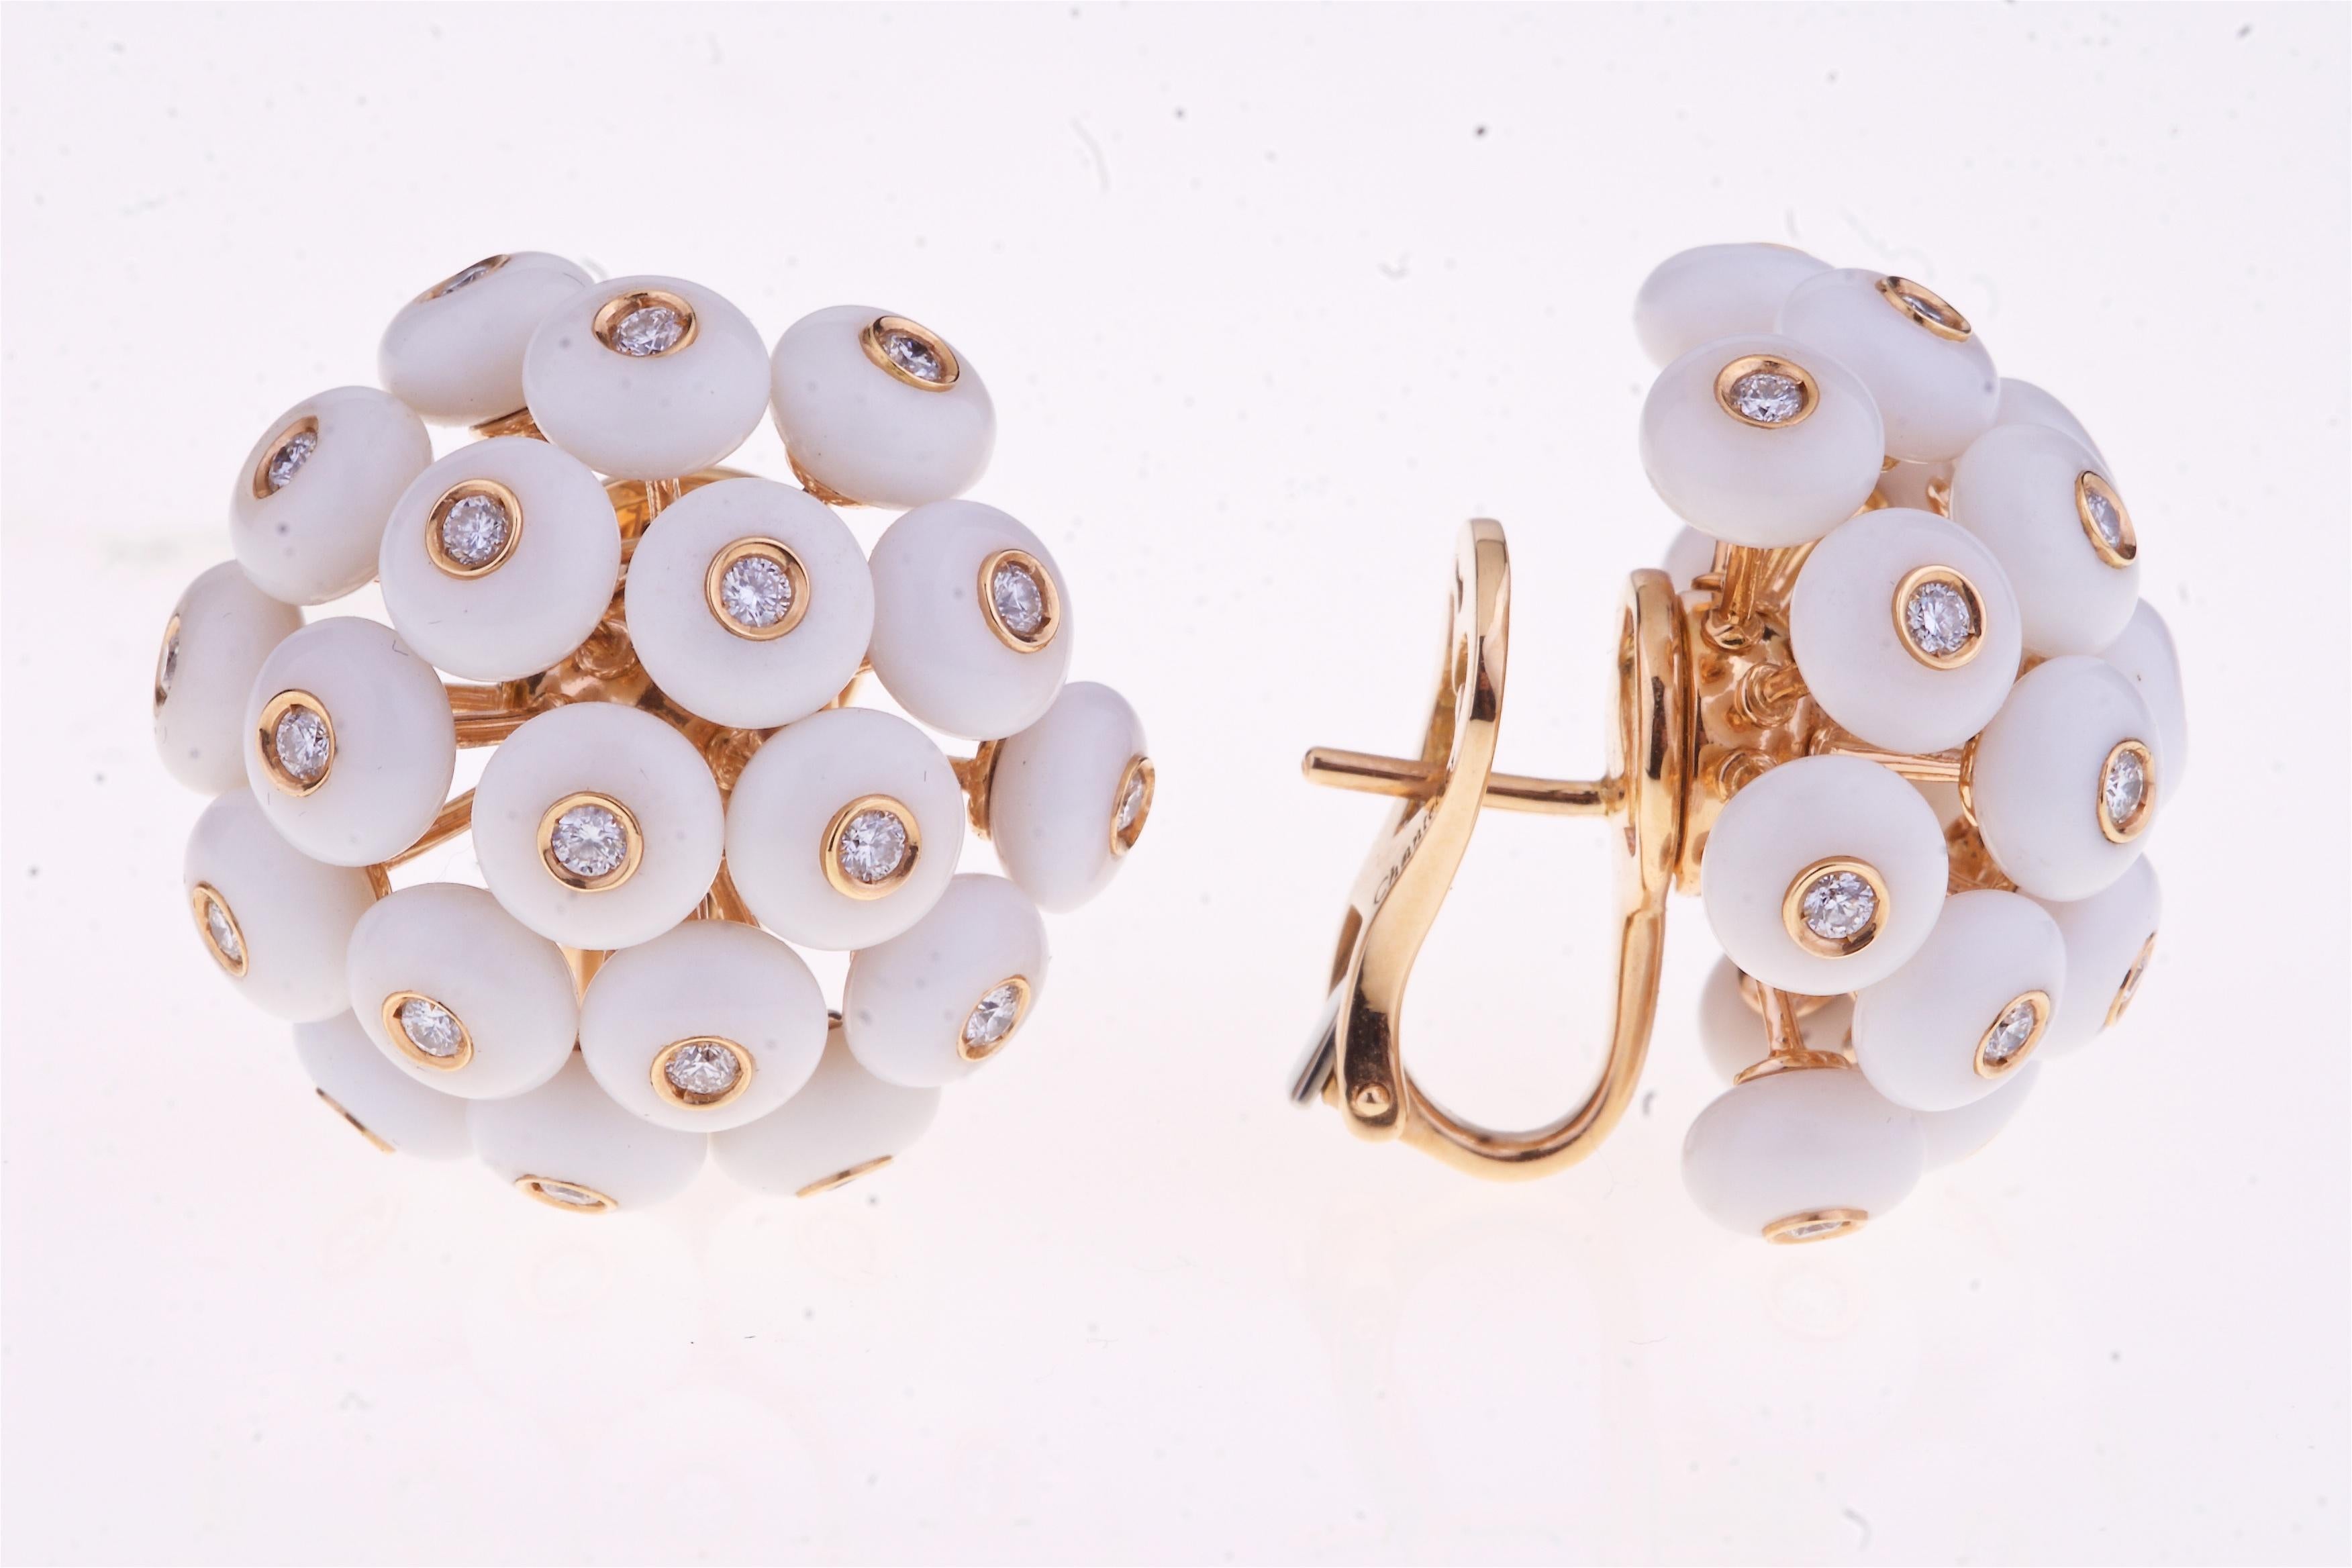 Brilliant Cut Chantecler Dandelion 18 Karat Gold and Kogolong Earrings with Diamonds